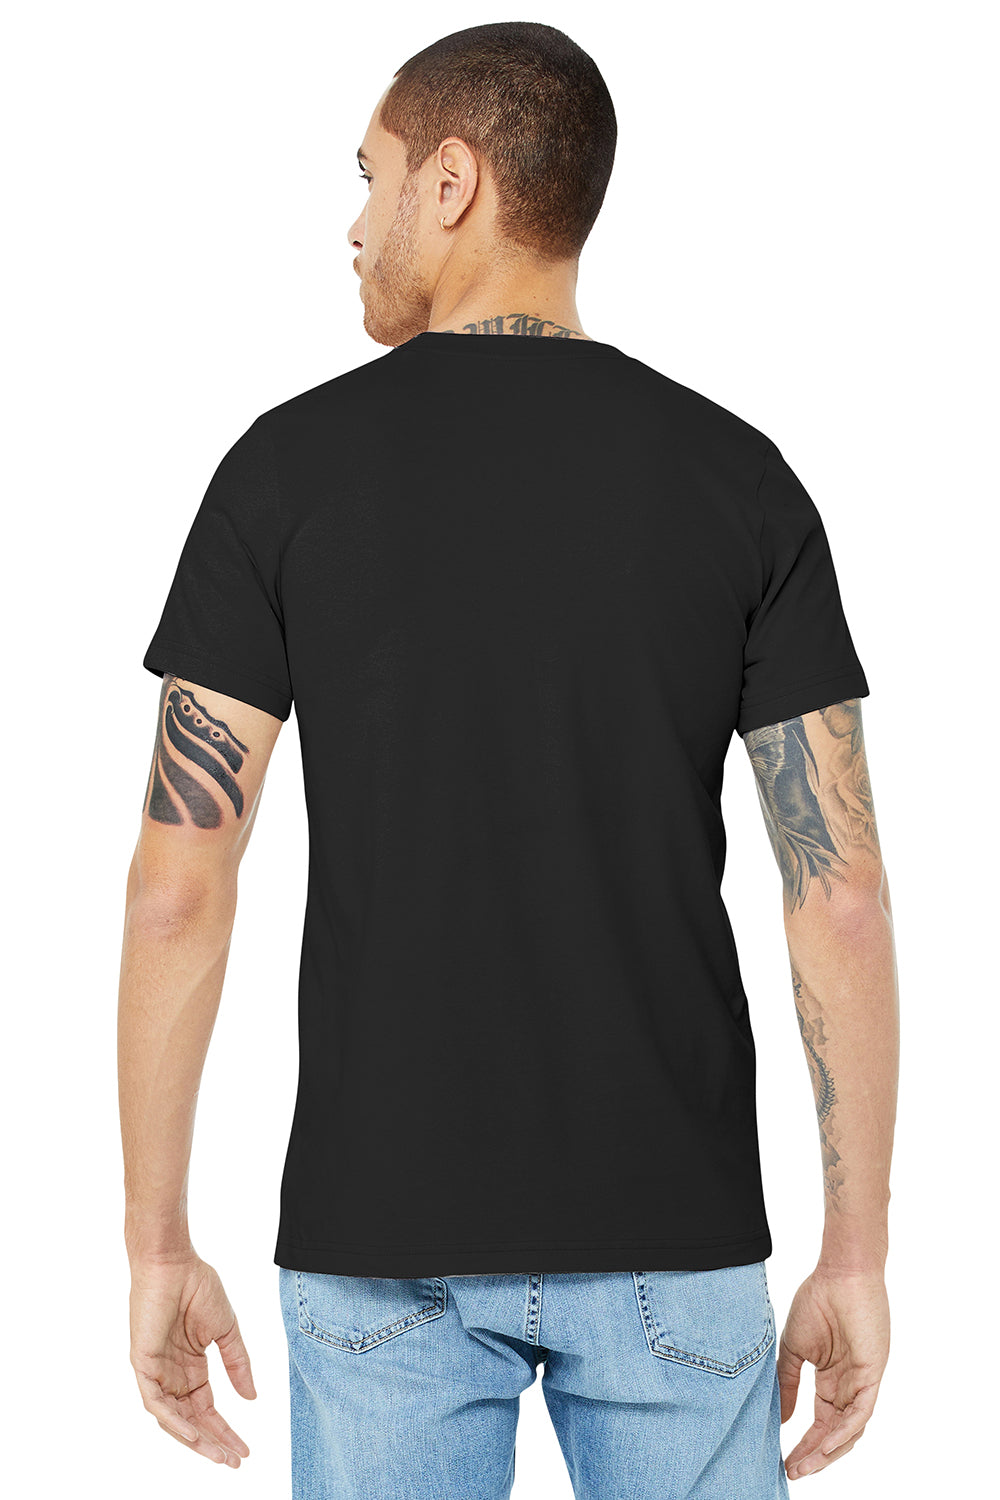 Bella + Canvas BC3001/3001C Mens Jersey Short Sleeve Crewneck T-Shirt Black Model Back